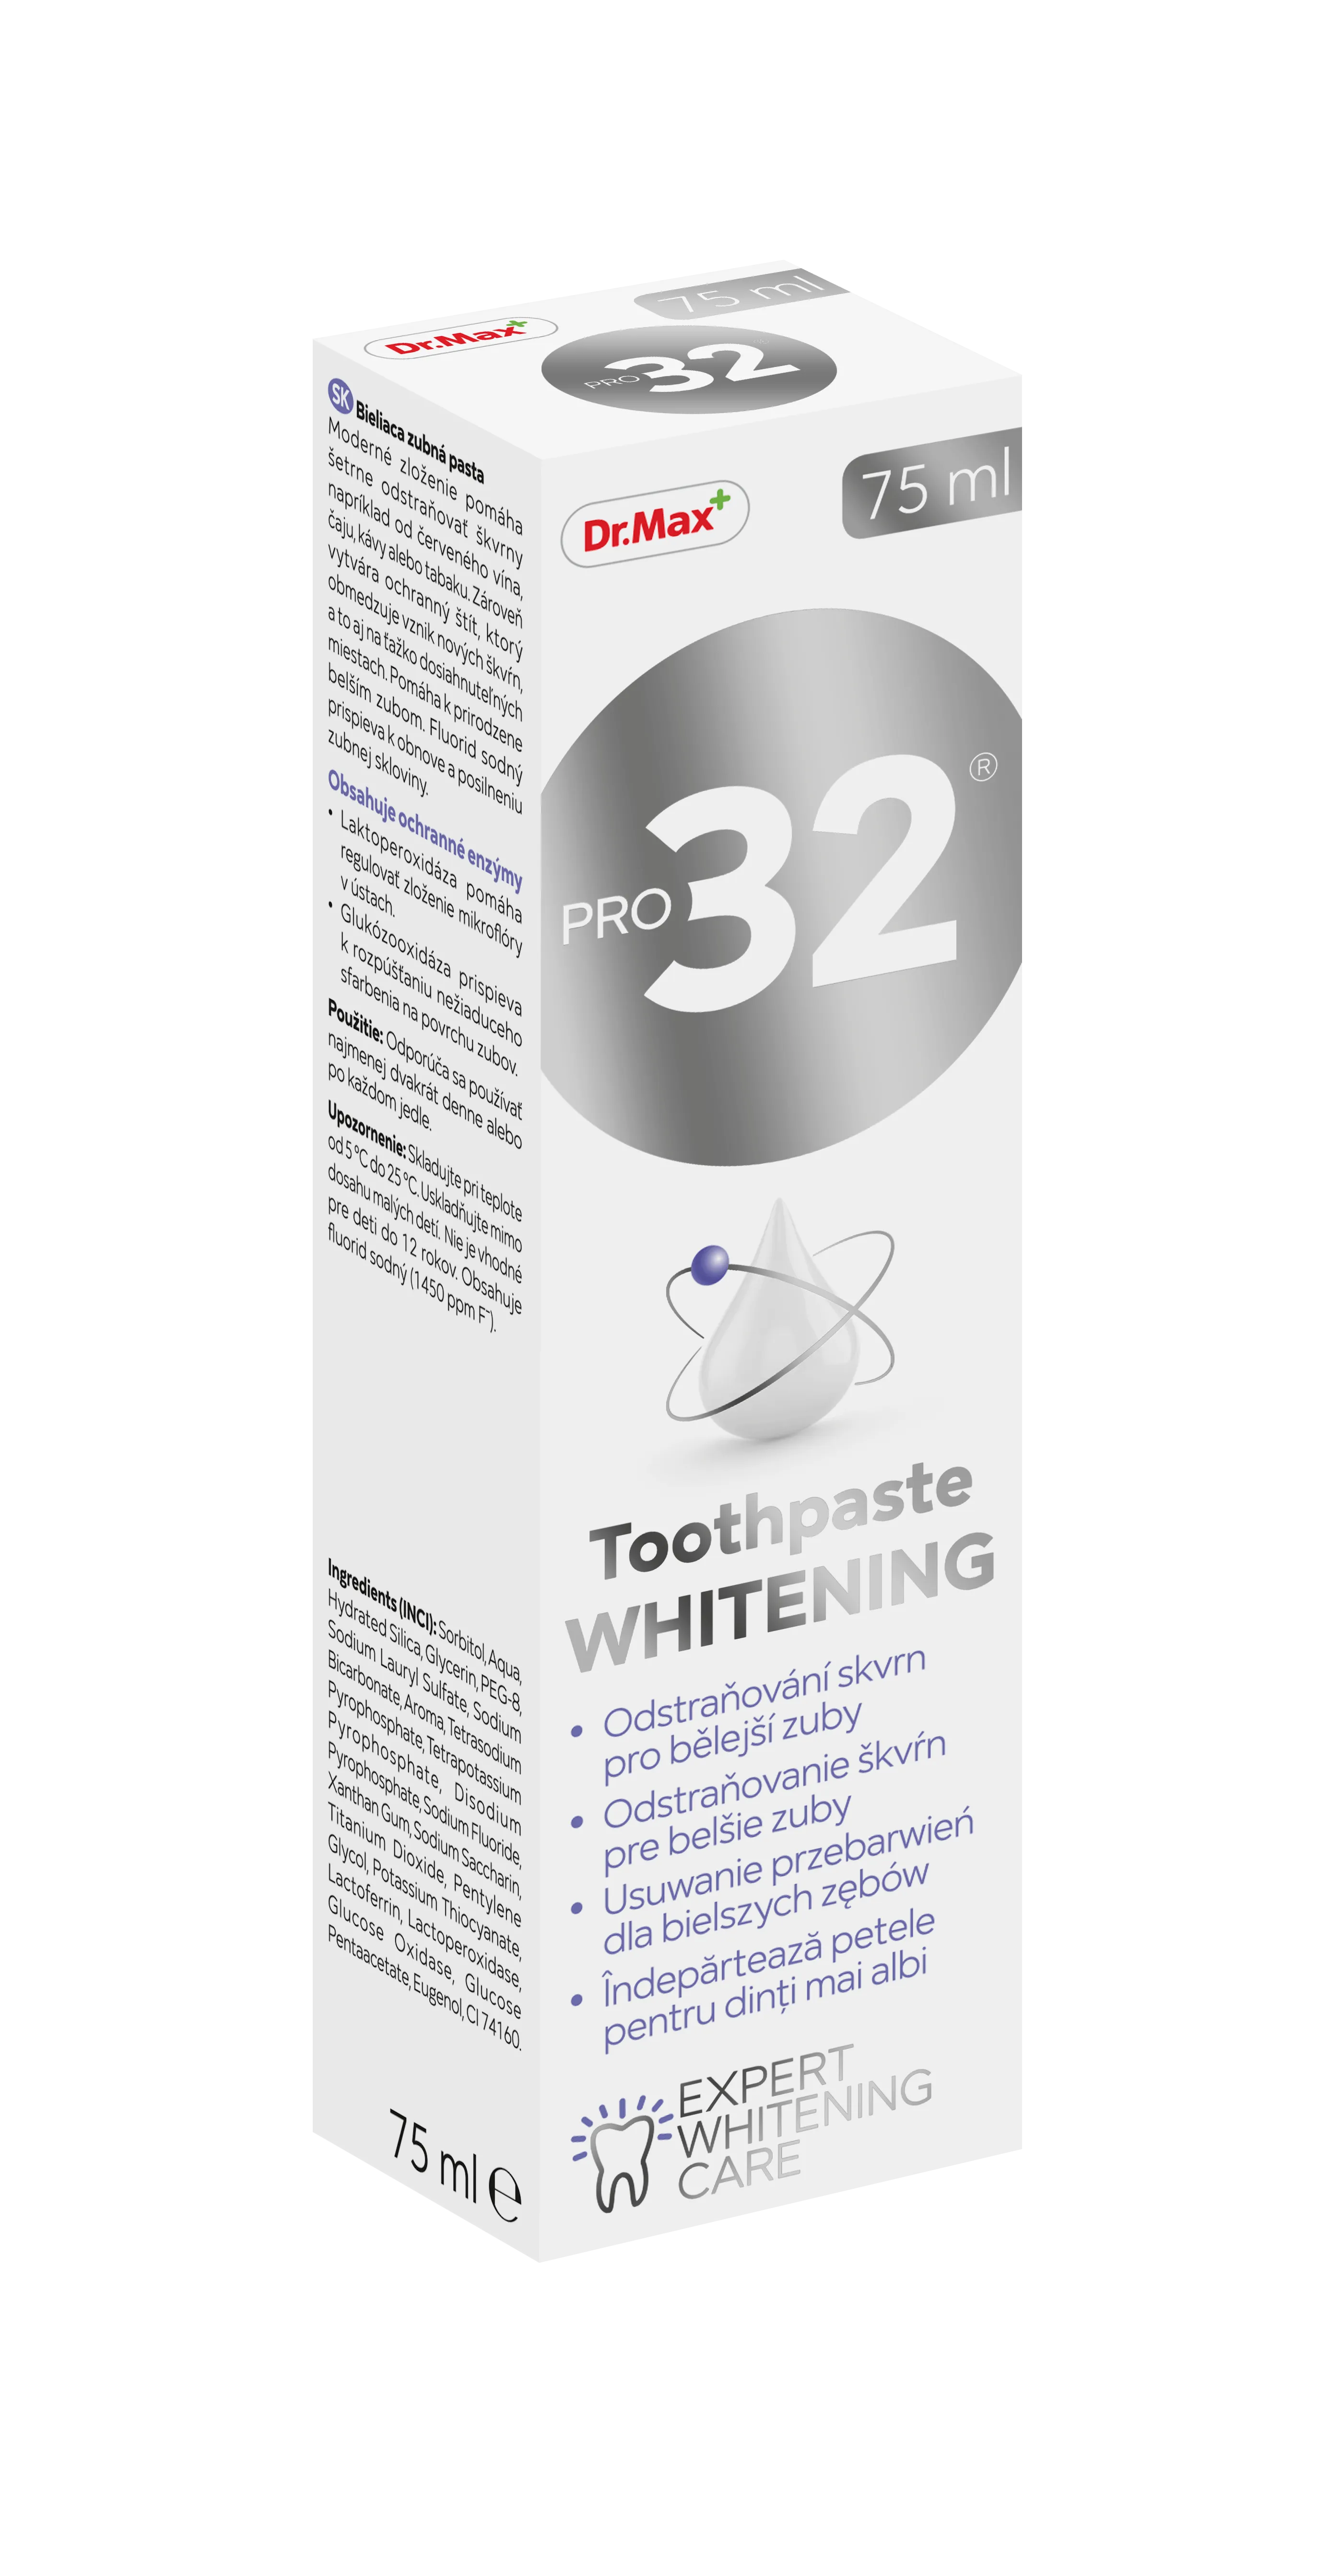 Pro32 Whitening Dr.Max, pasta do zębów, 75 ml